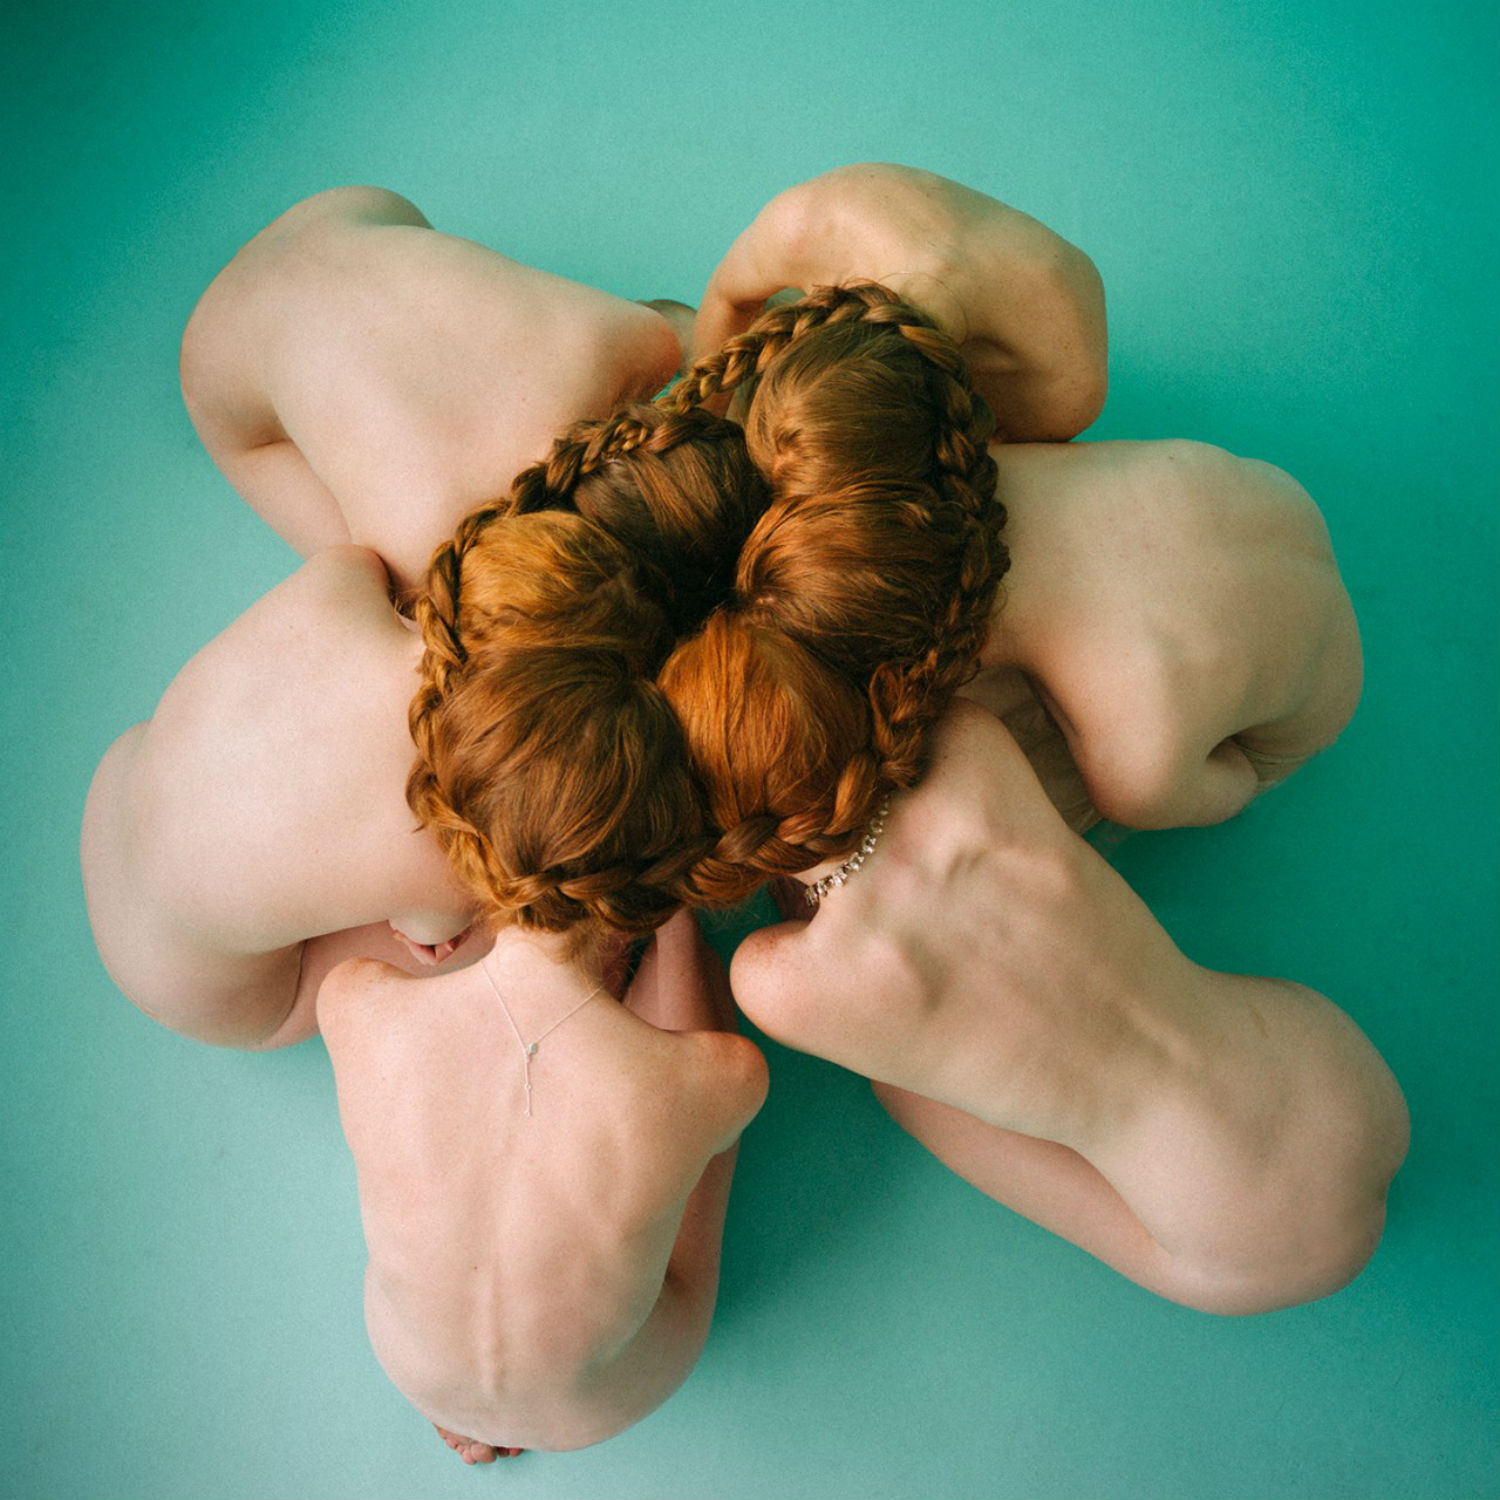 amanda charchian photographer nude feminine beauty model nude